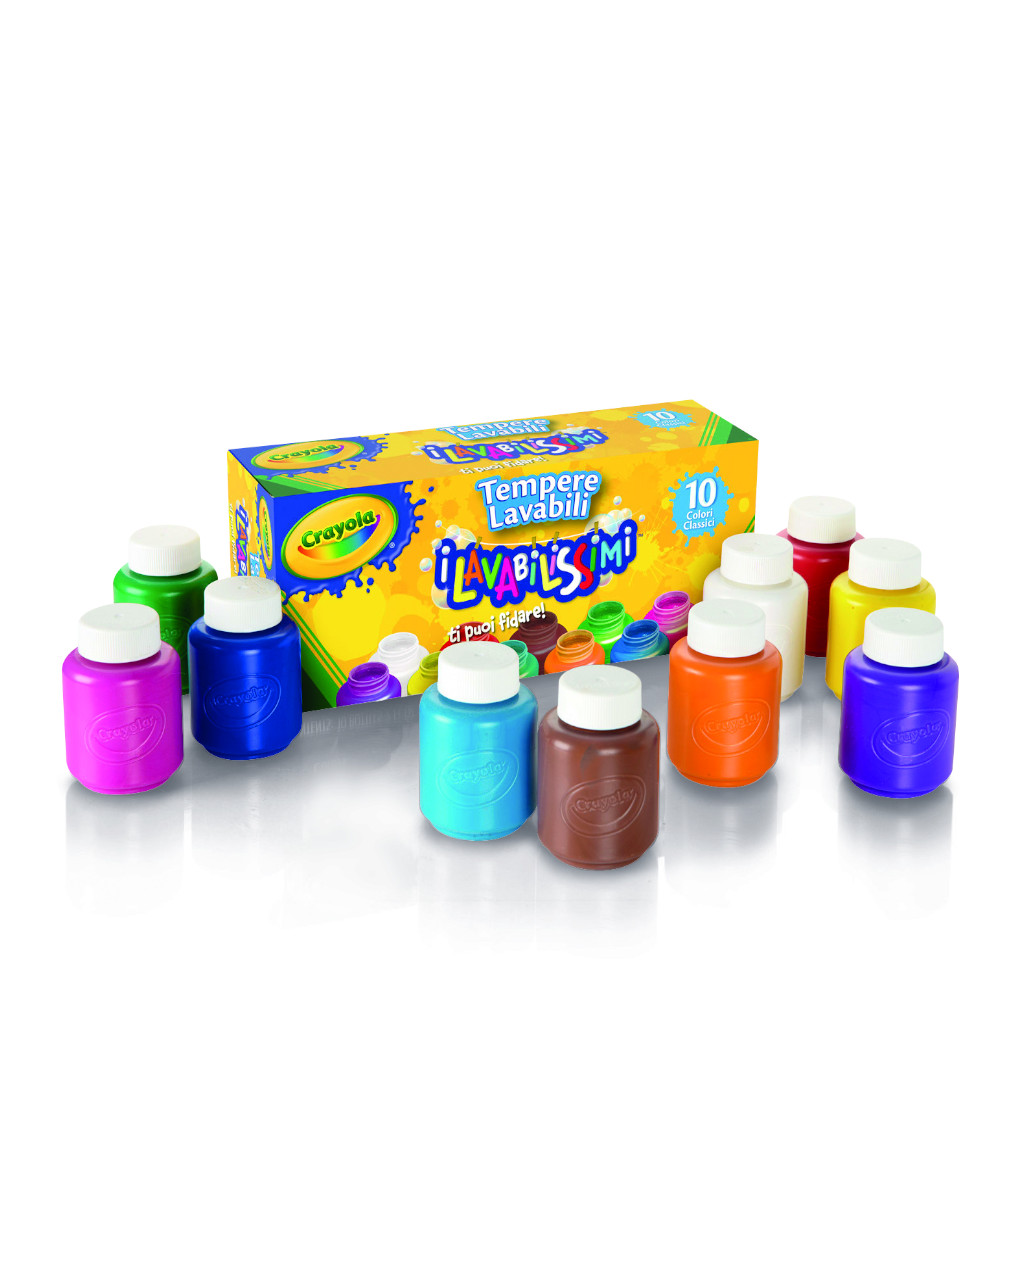 Crayola - 10 tempere lavabili